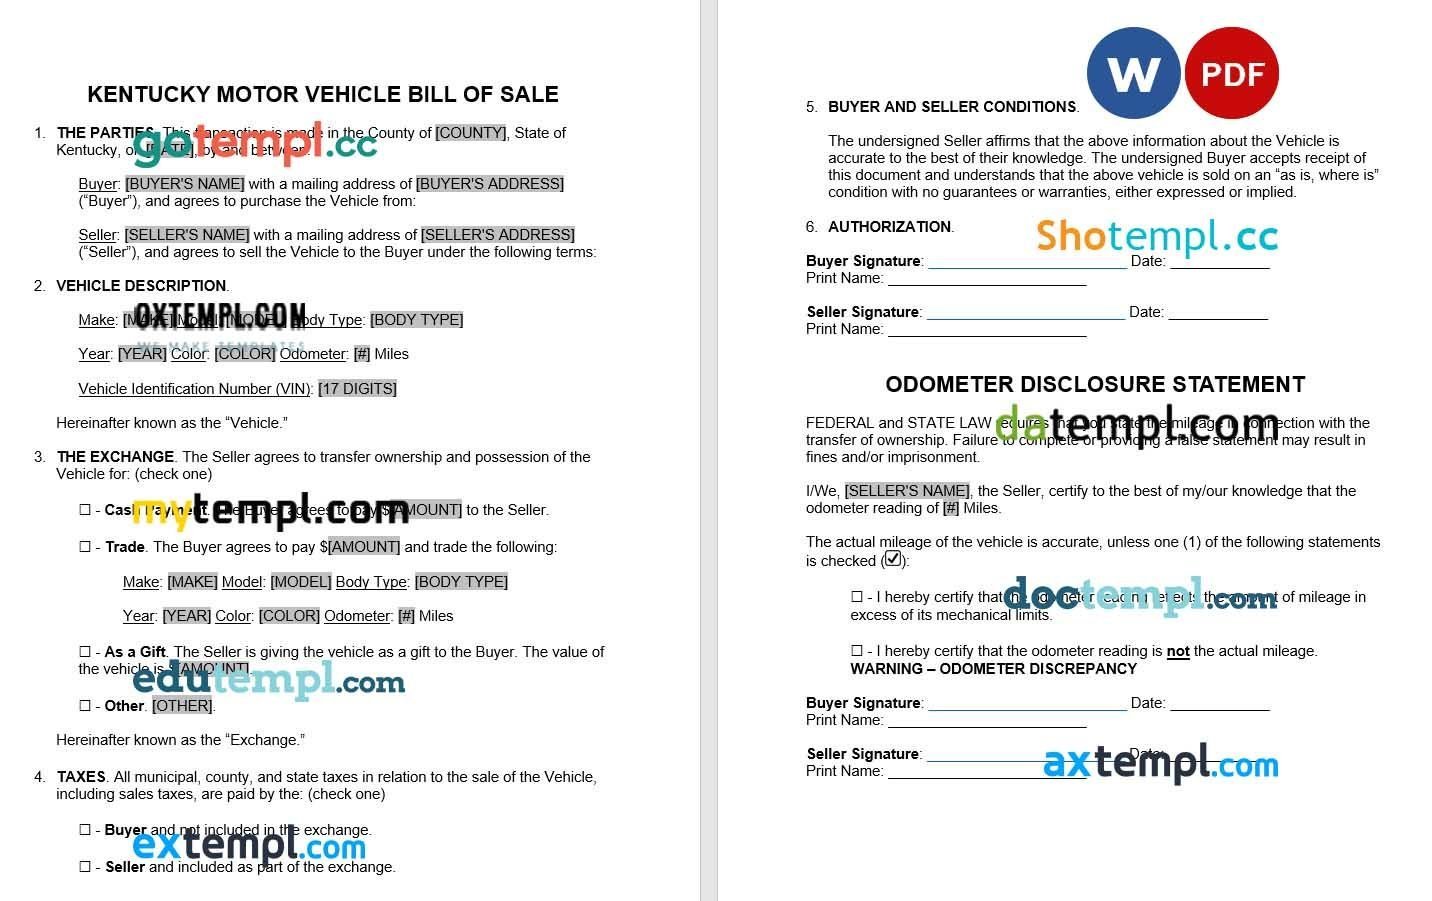 Kentucky Motor Vehicle Bill of Sale example, fully editable